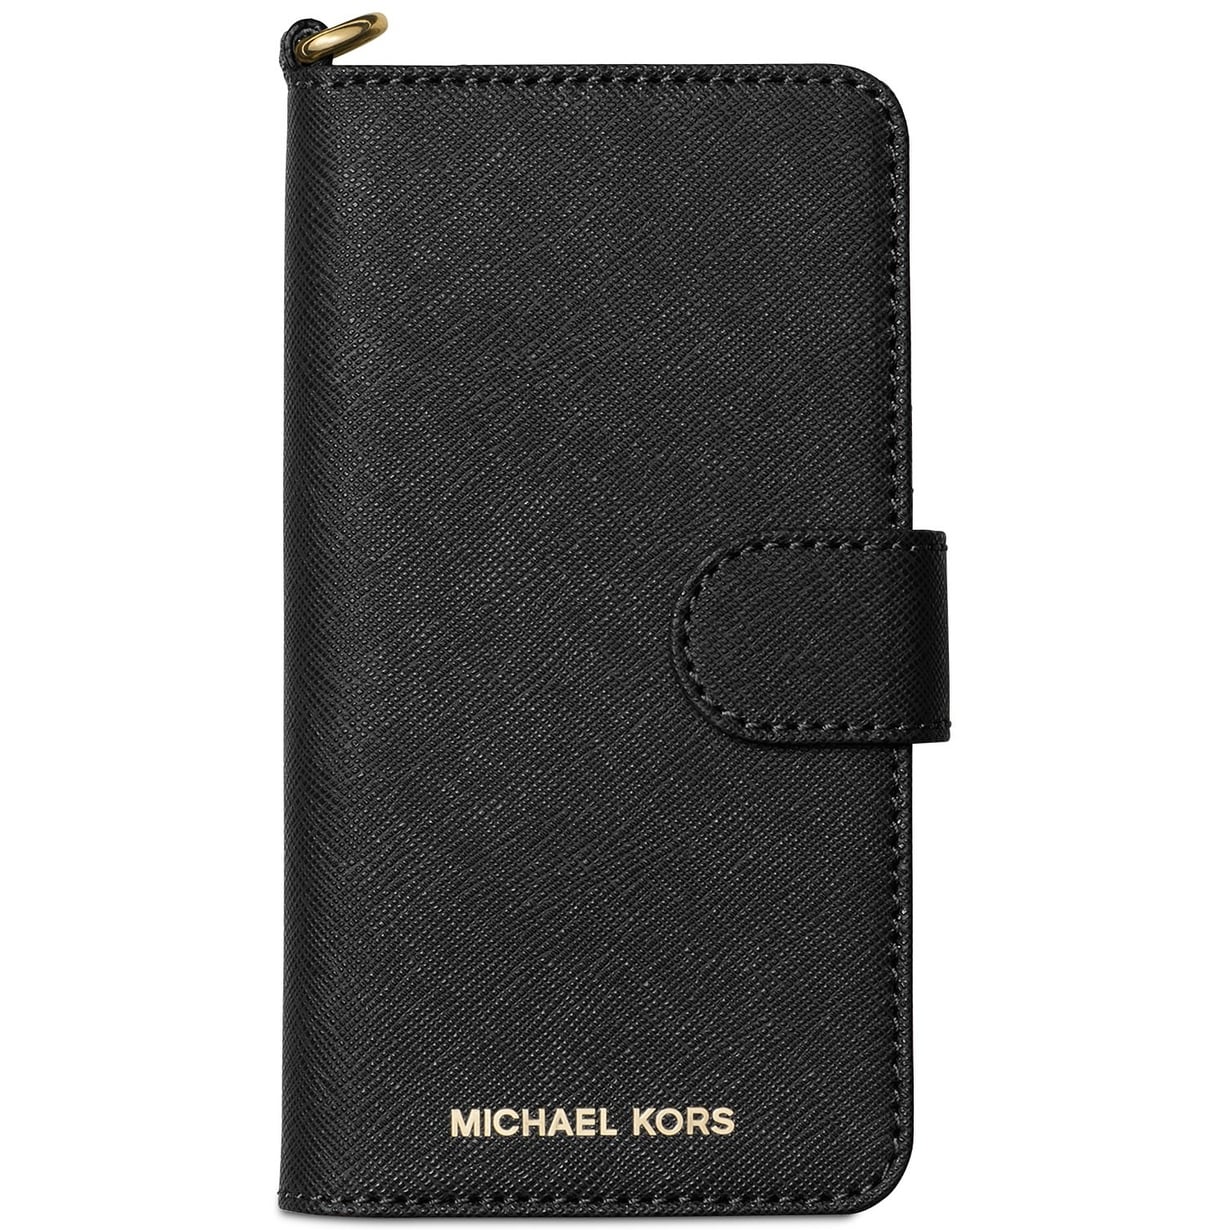 michael kors iphone 11 pro wallet case 